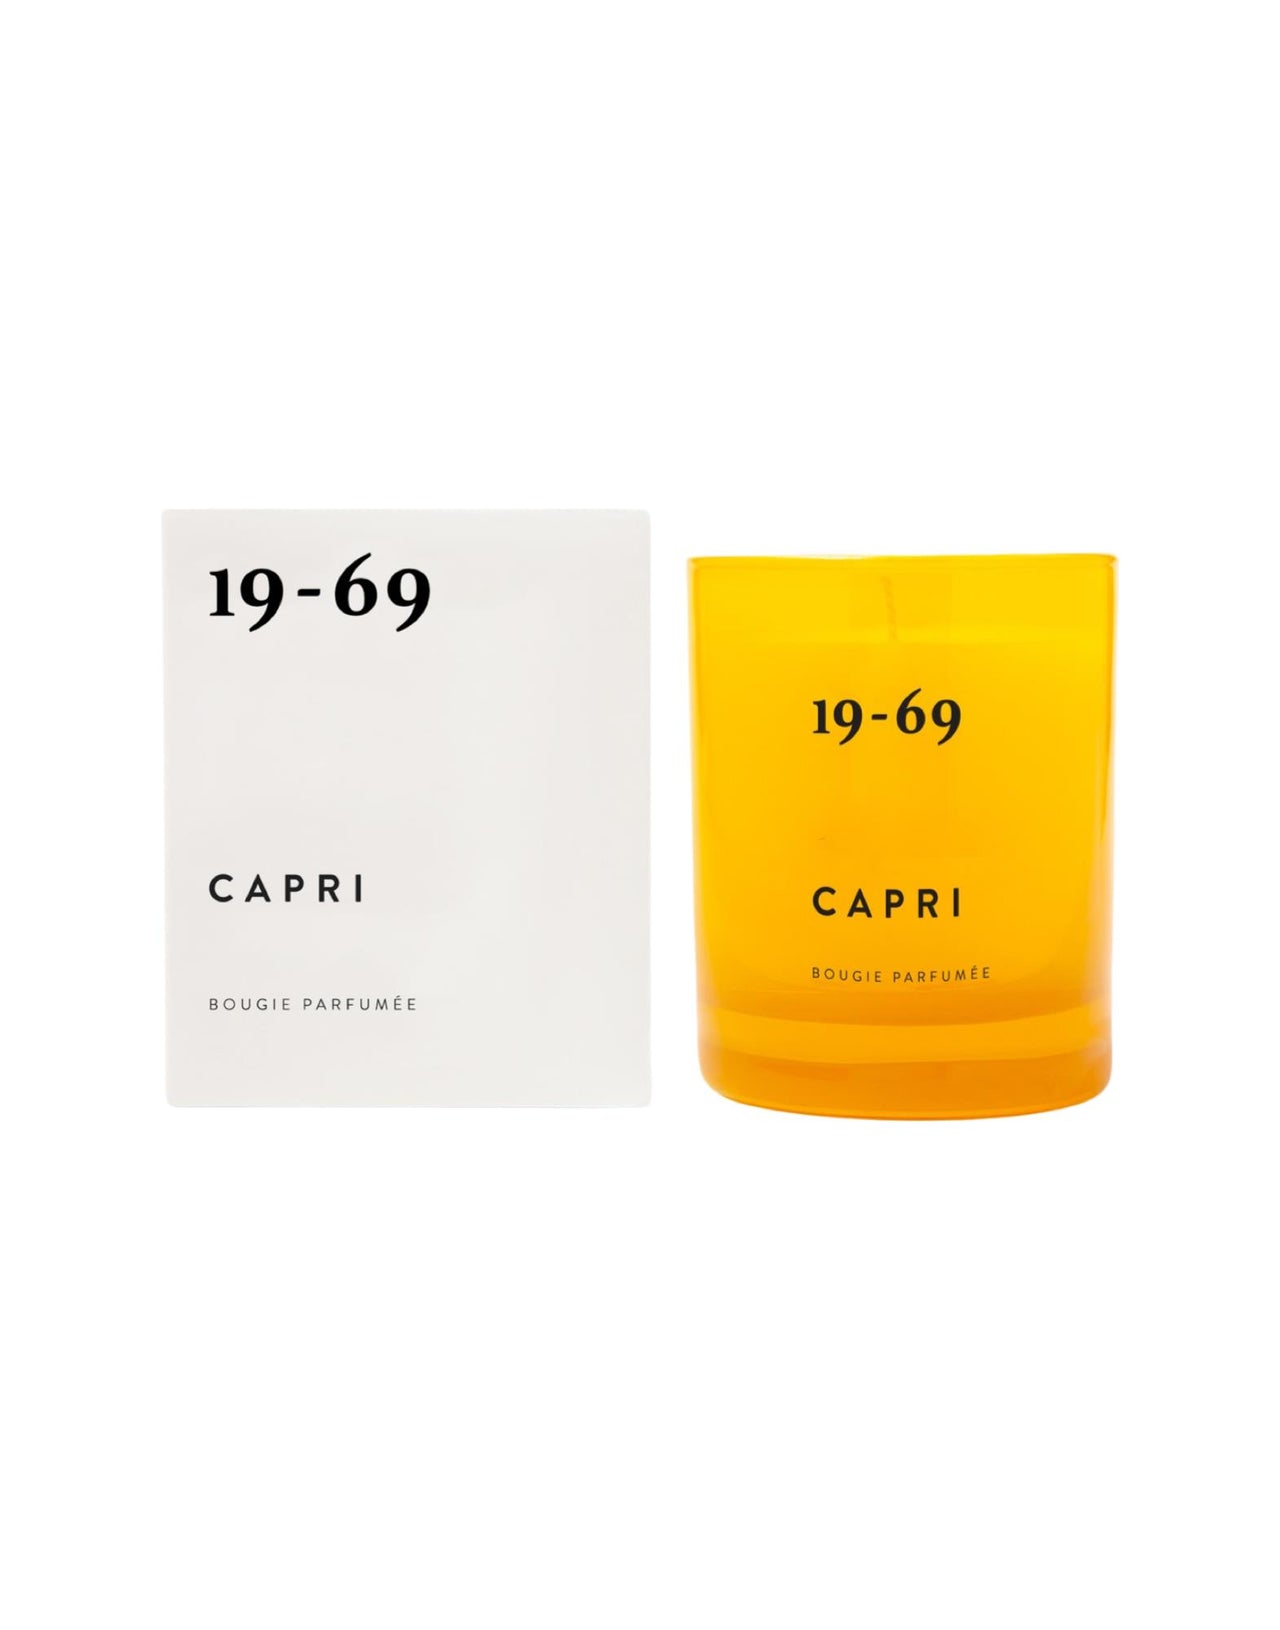 19-69 Capri candle